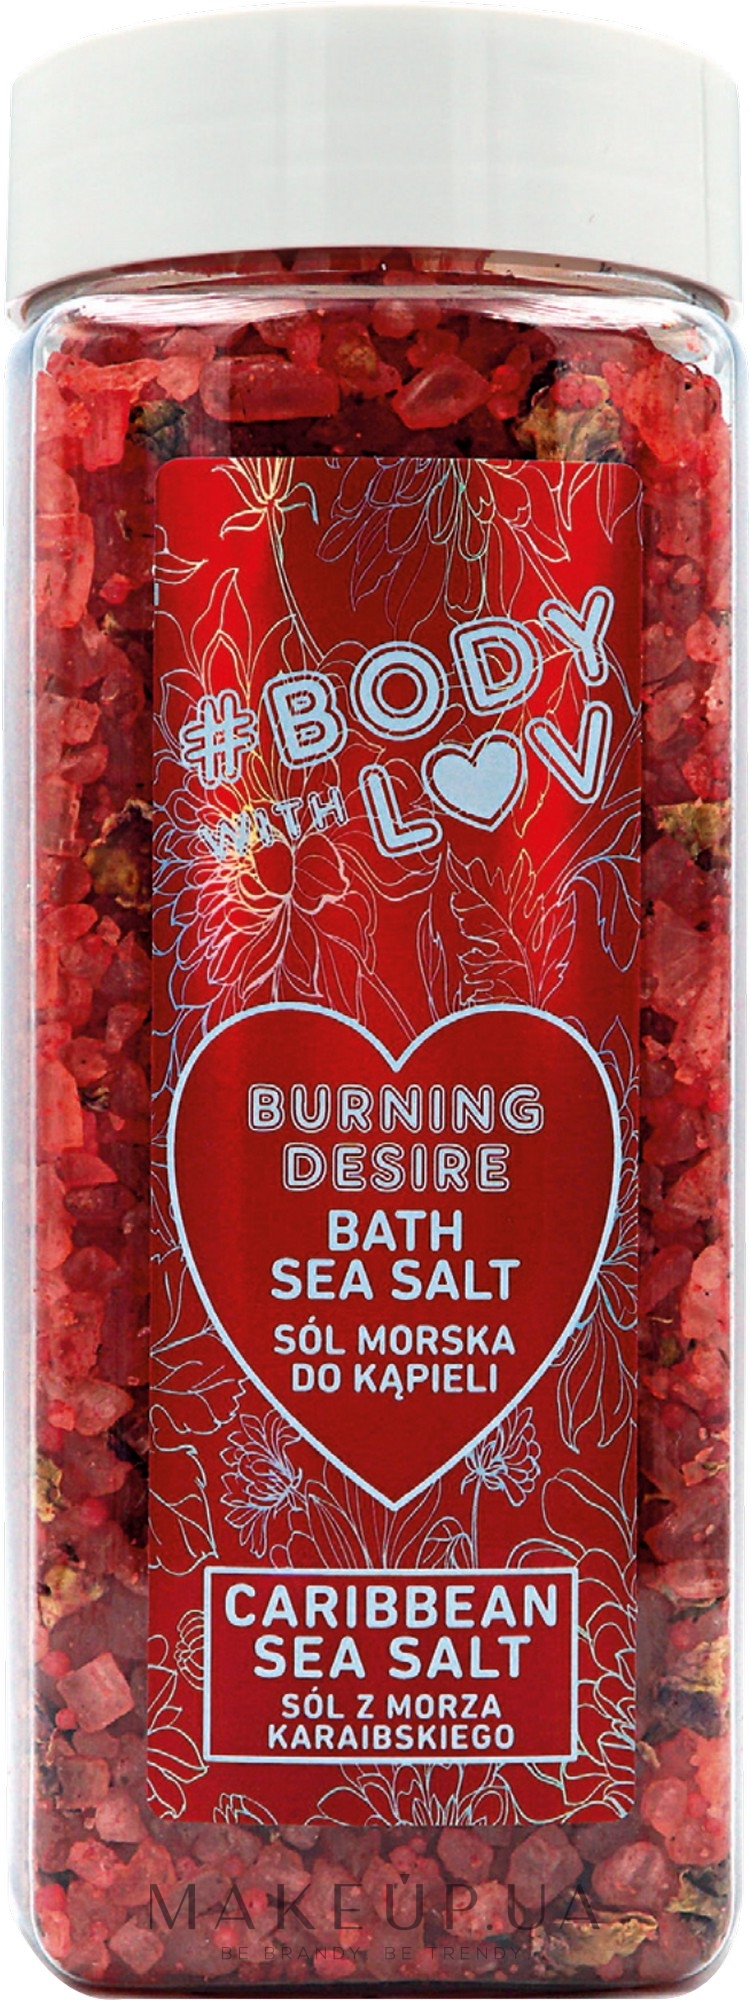 Соль для ванн - New Anna Cosmetics Body With Luv Sea Salt For Bath Burning Desire — фото 500g